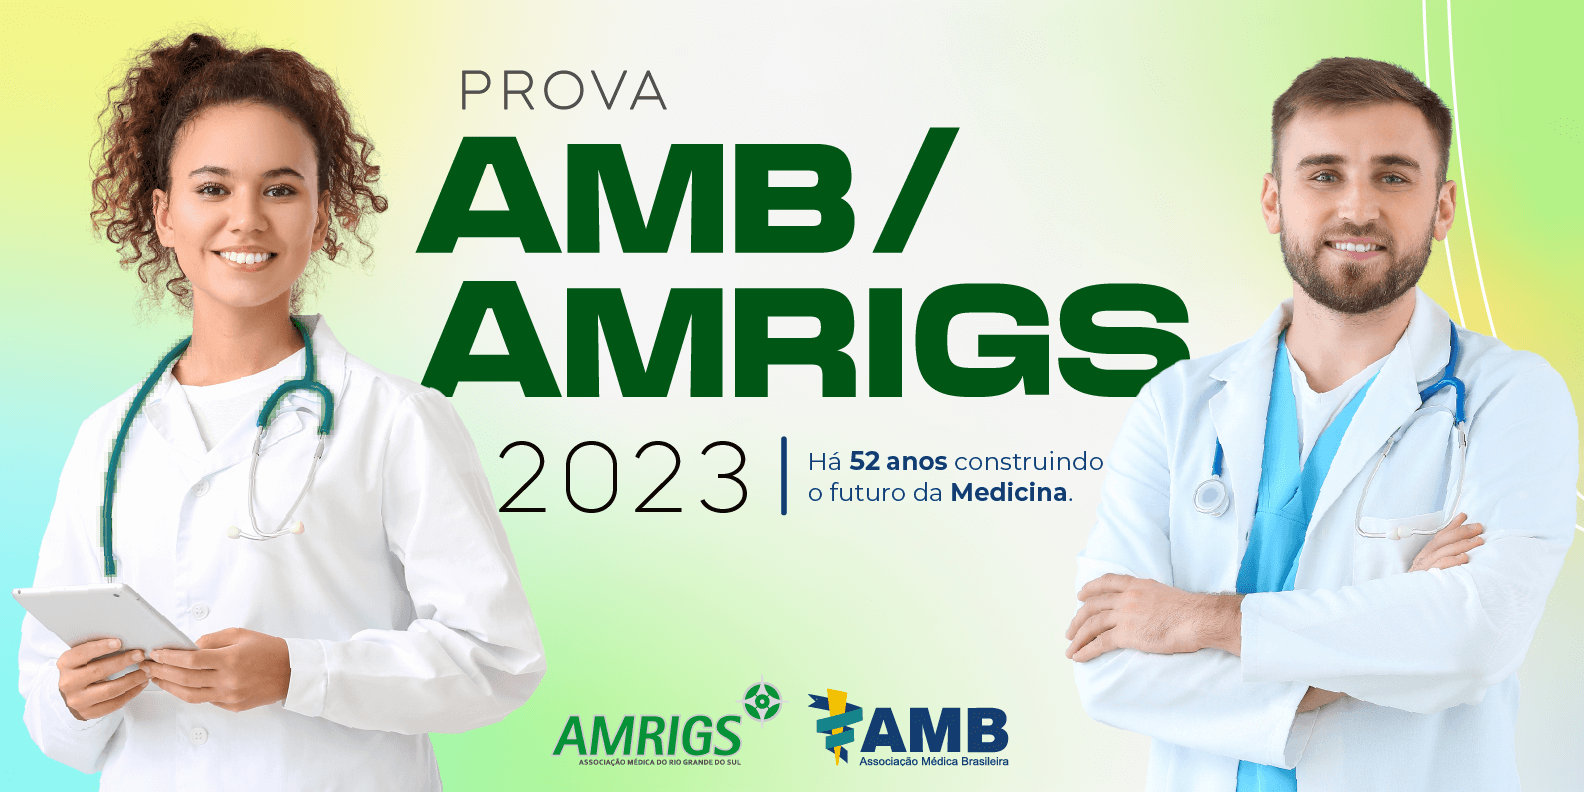 Prova AMB/AMRIGS | banner